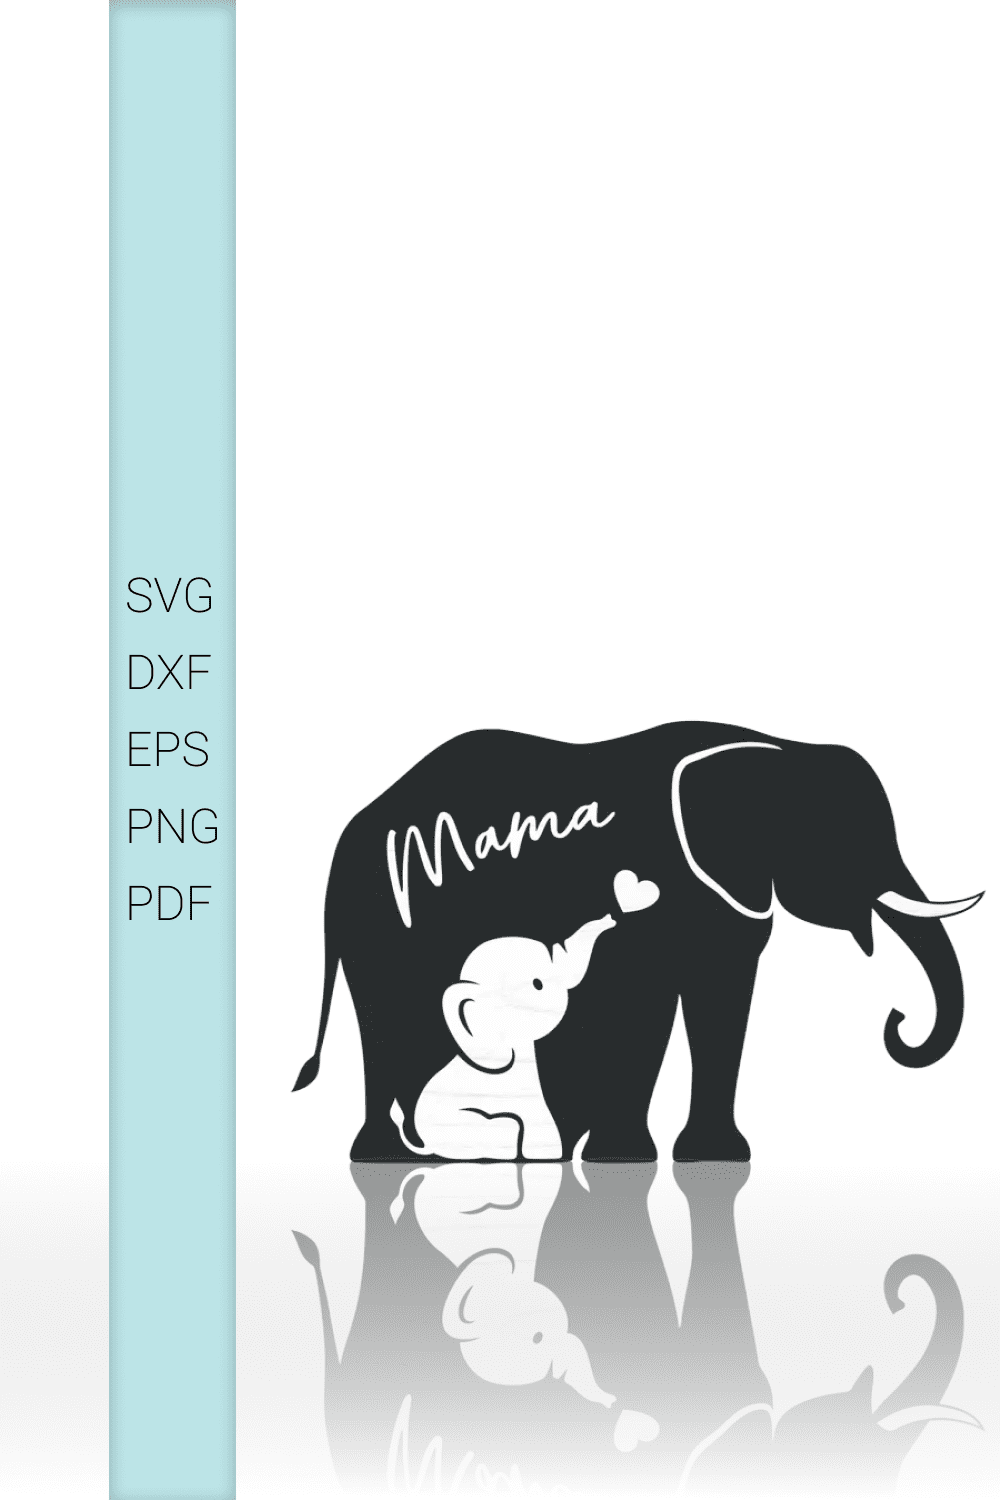 Baby elephant svg Pinterest collage image.